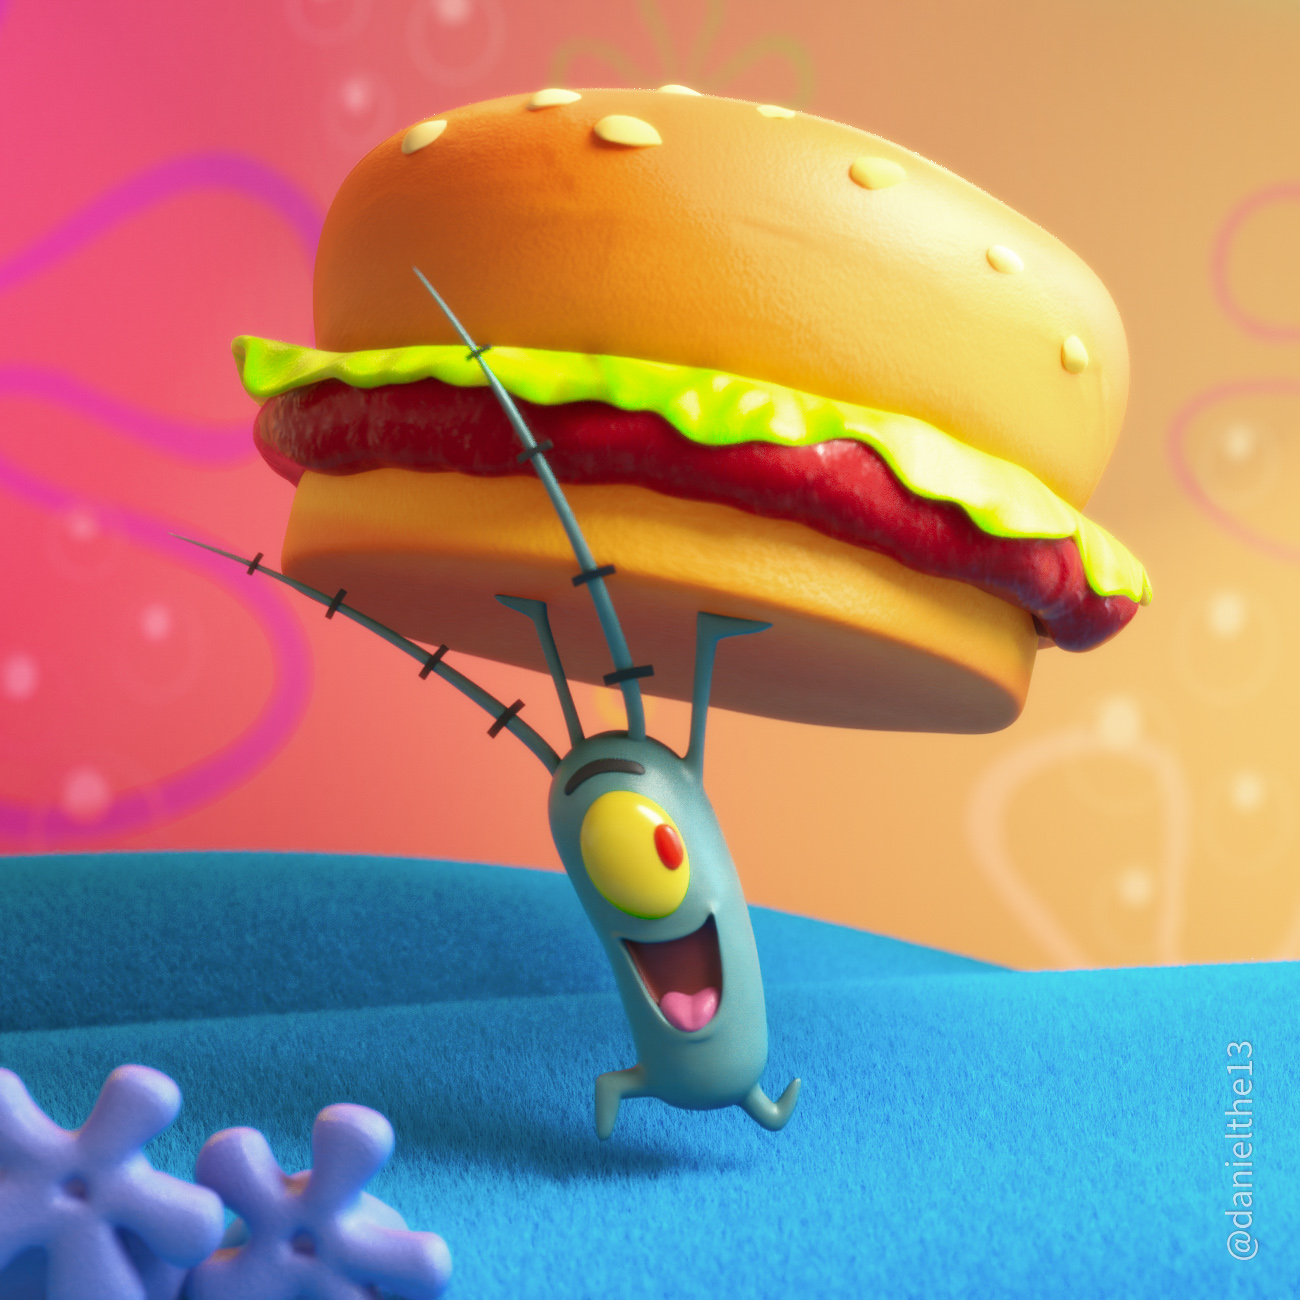 Spongebob Plankton - Finished Projects - Blender Artists Community